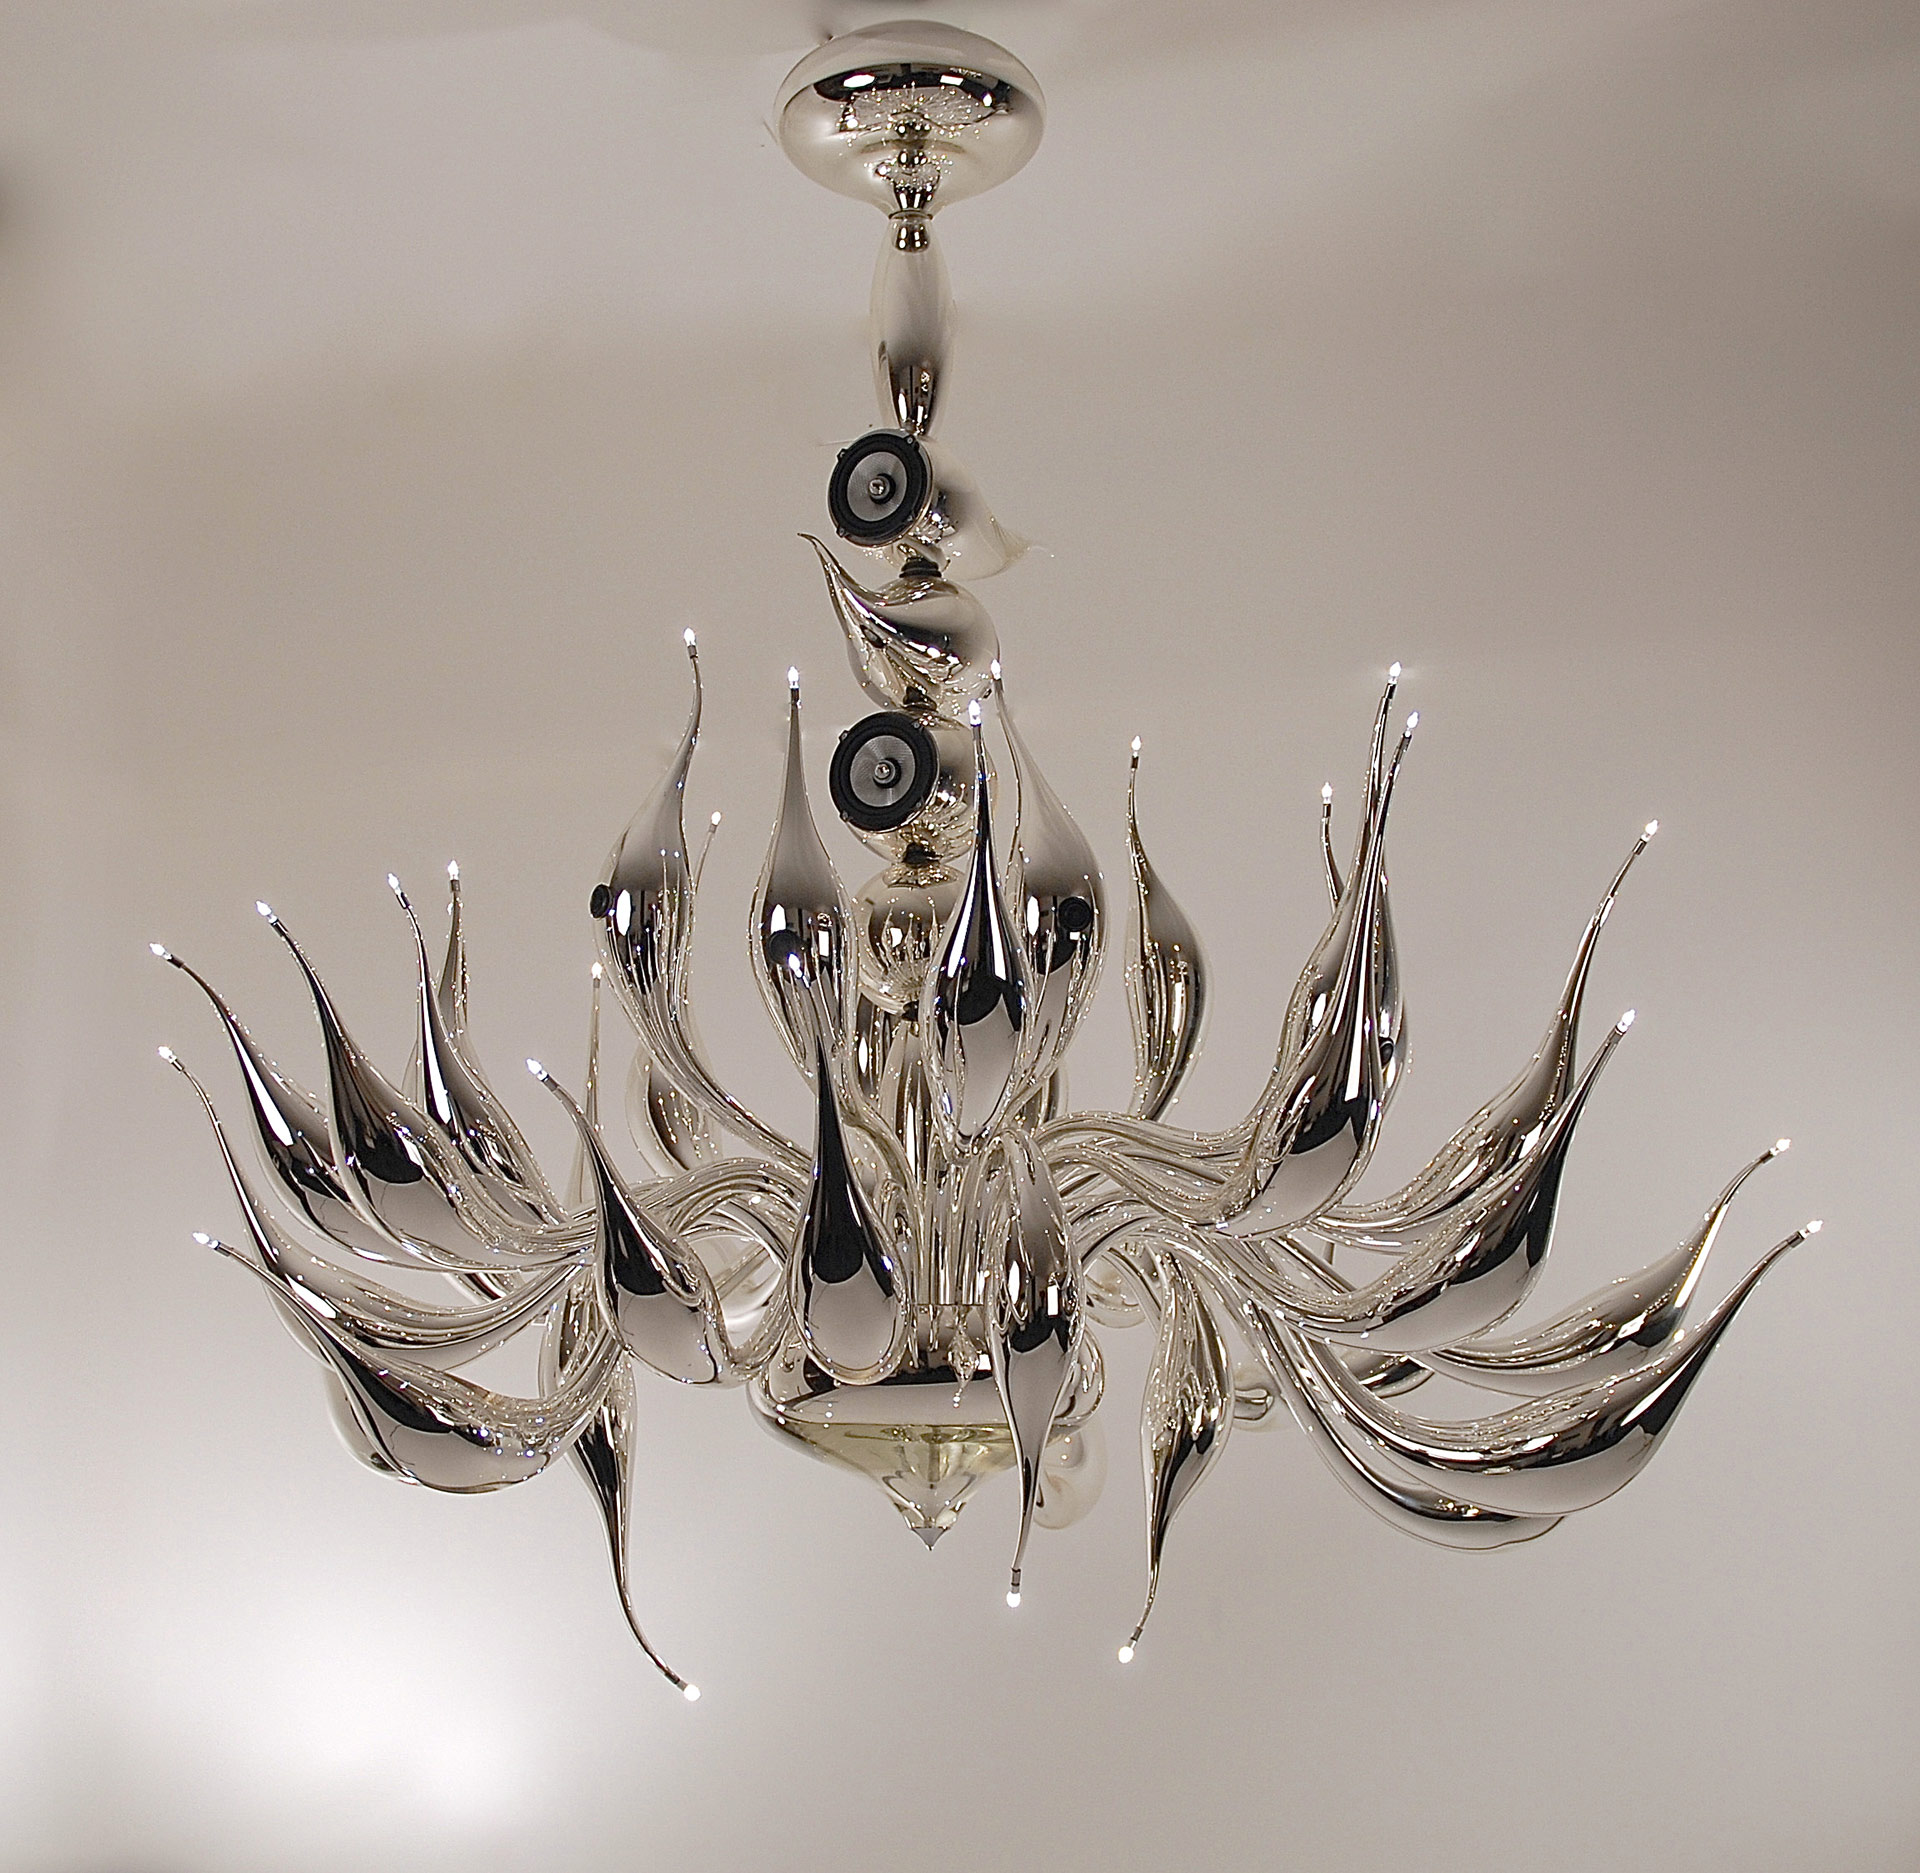 Silver modern chandelier with loudspeakers